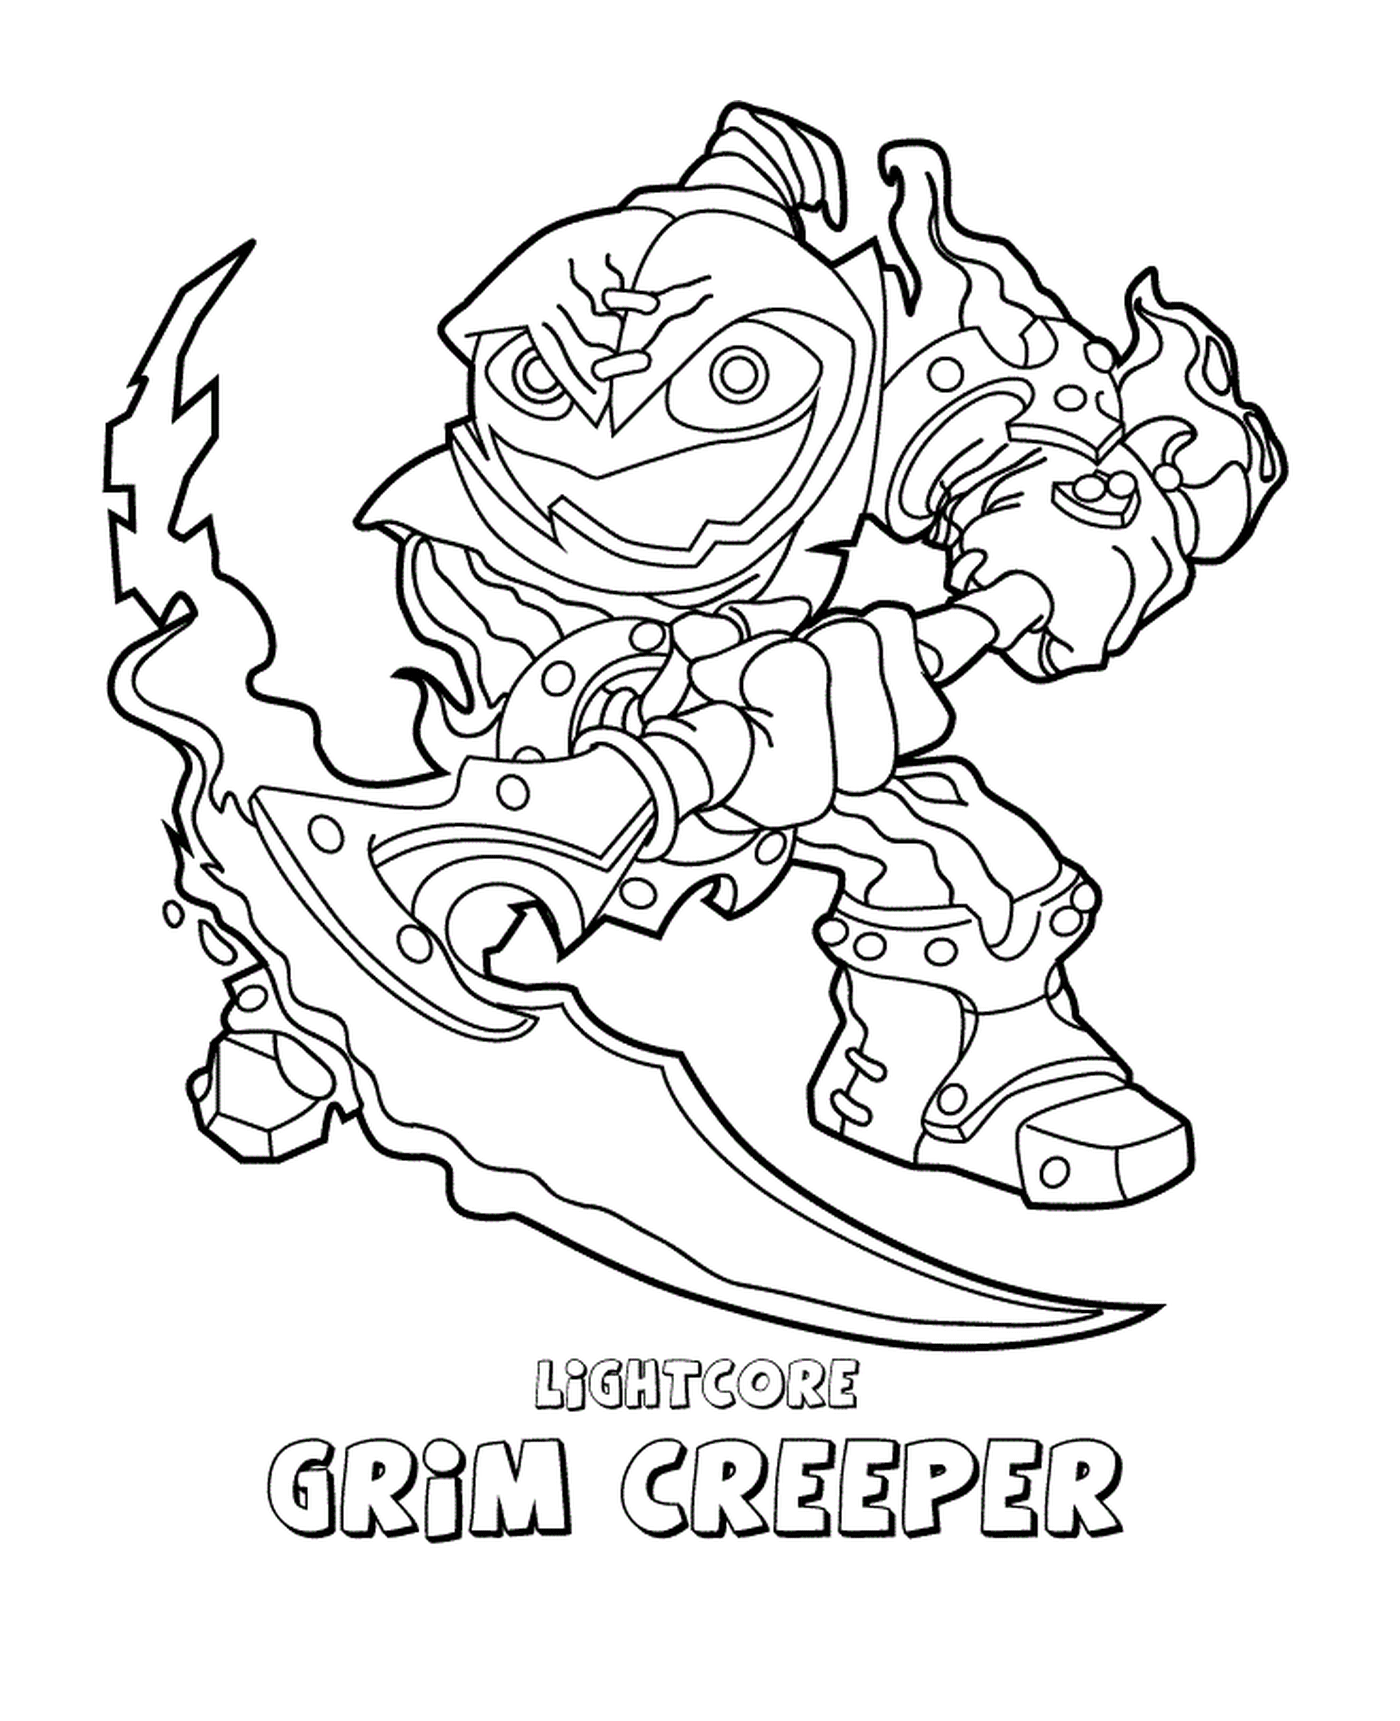   Skylanders Swap Force Undead LightCore Grim Creeper 